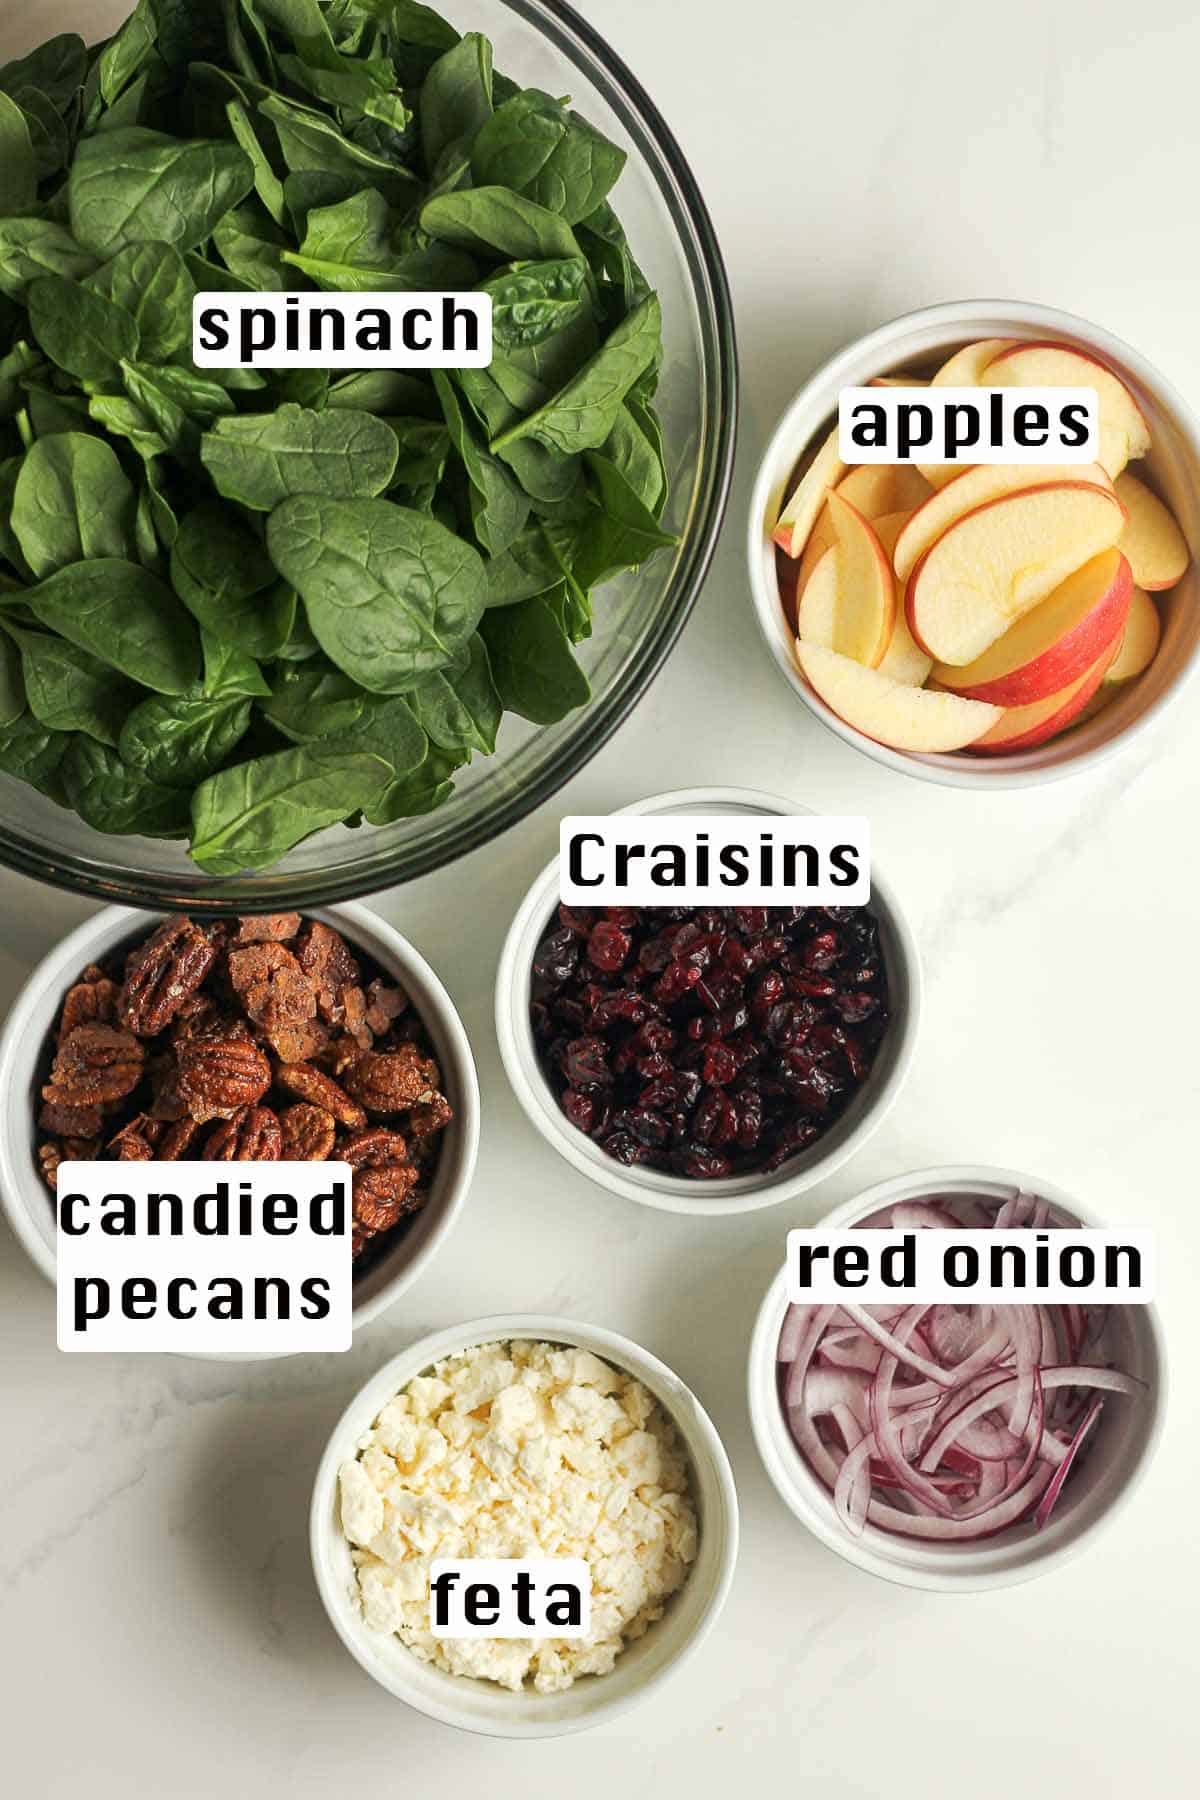 The salad ingredients.